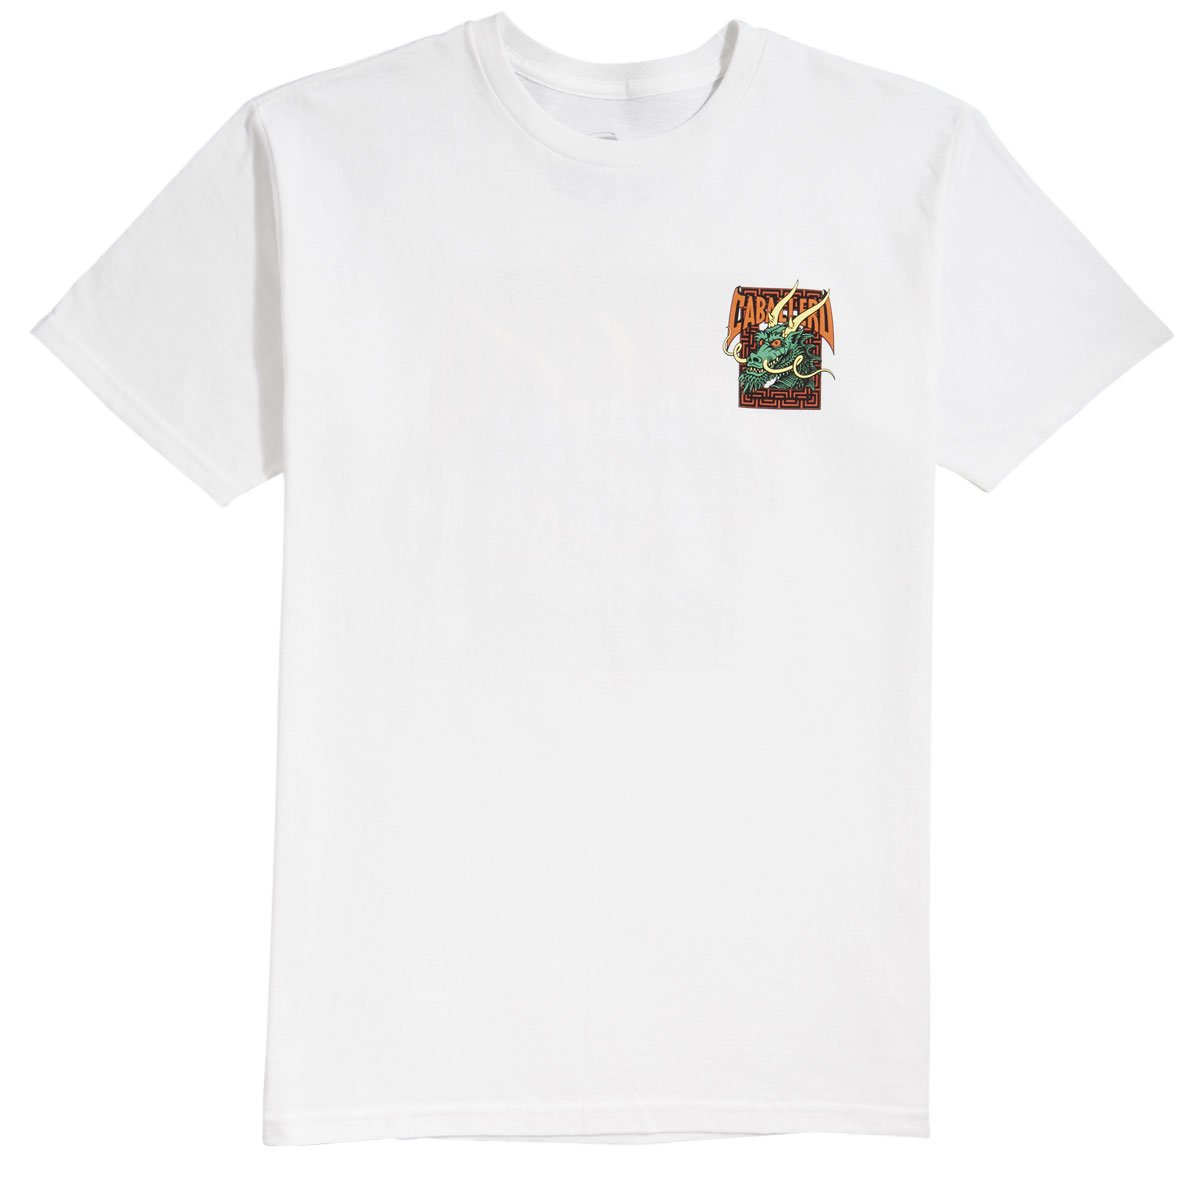 Powell-Peralta Caballero Street Dragon T-Shirt - White image 2